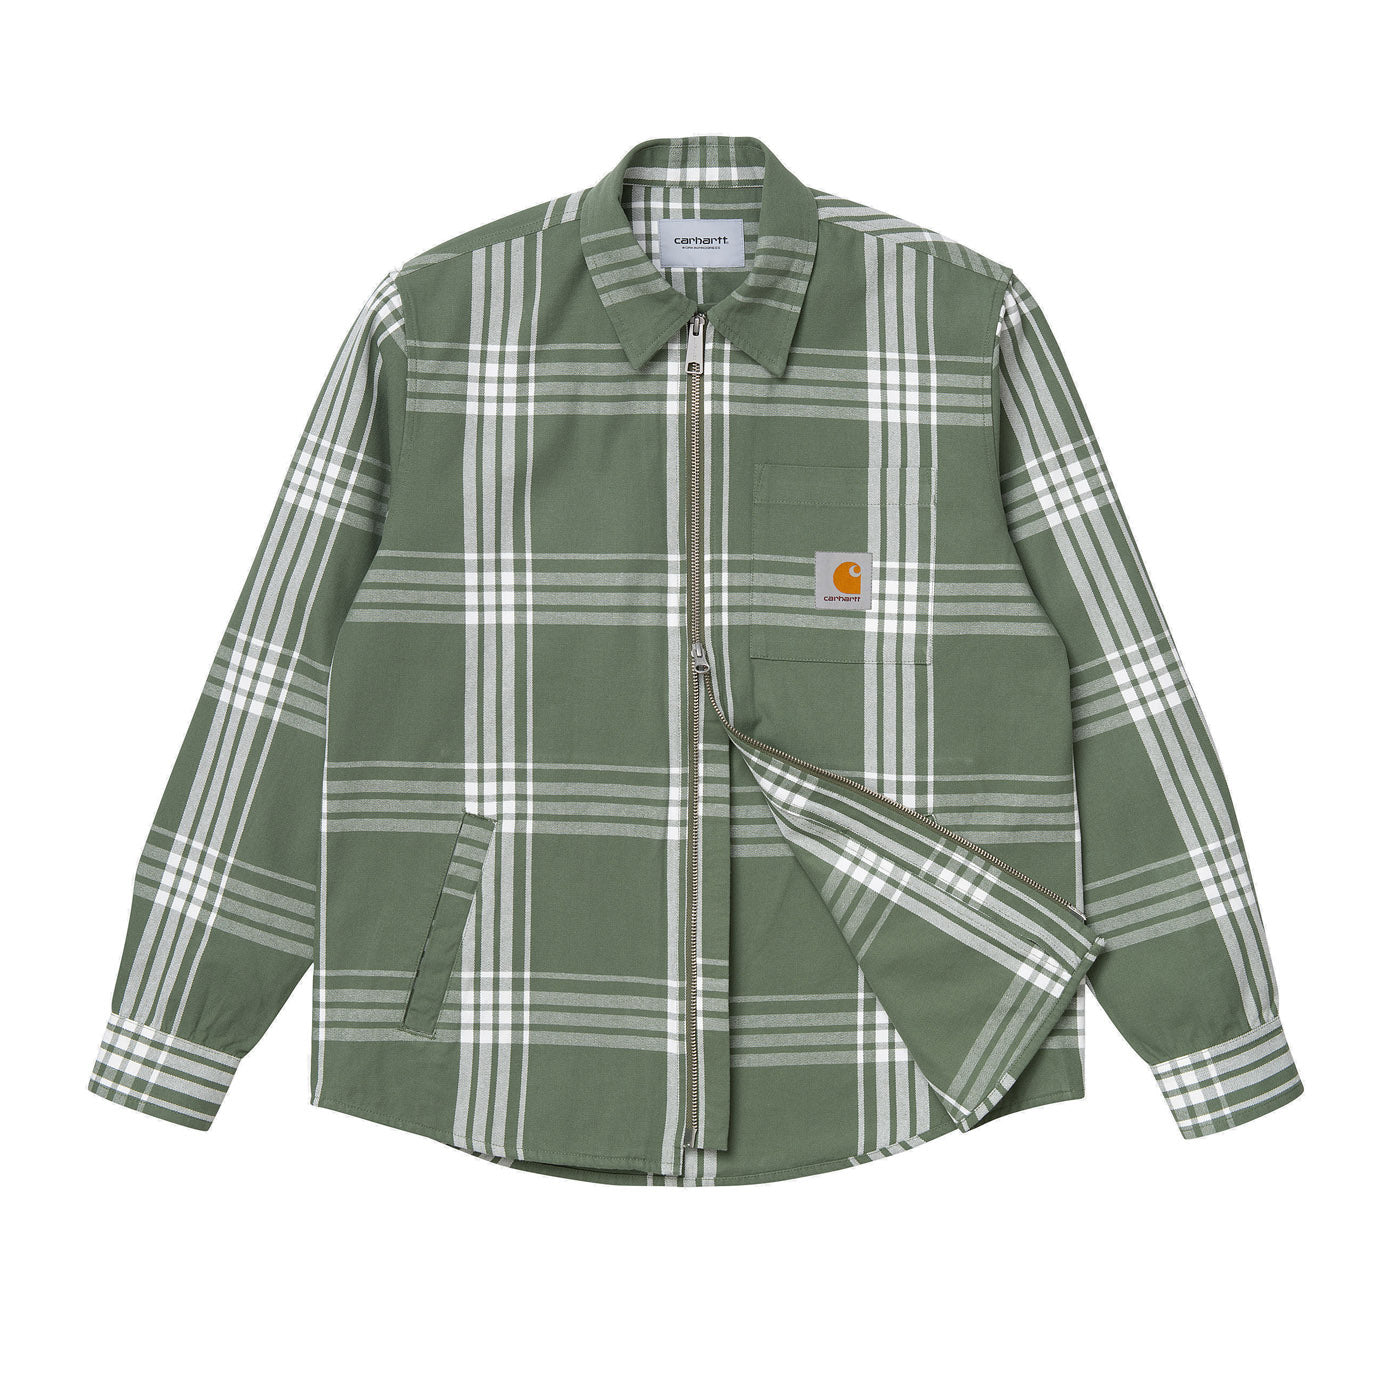 Carhartt WIP Cahill Shirt Jacket Cahill Check/Dollar Green